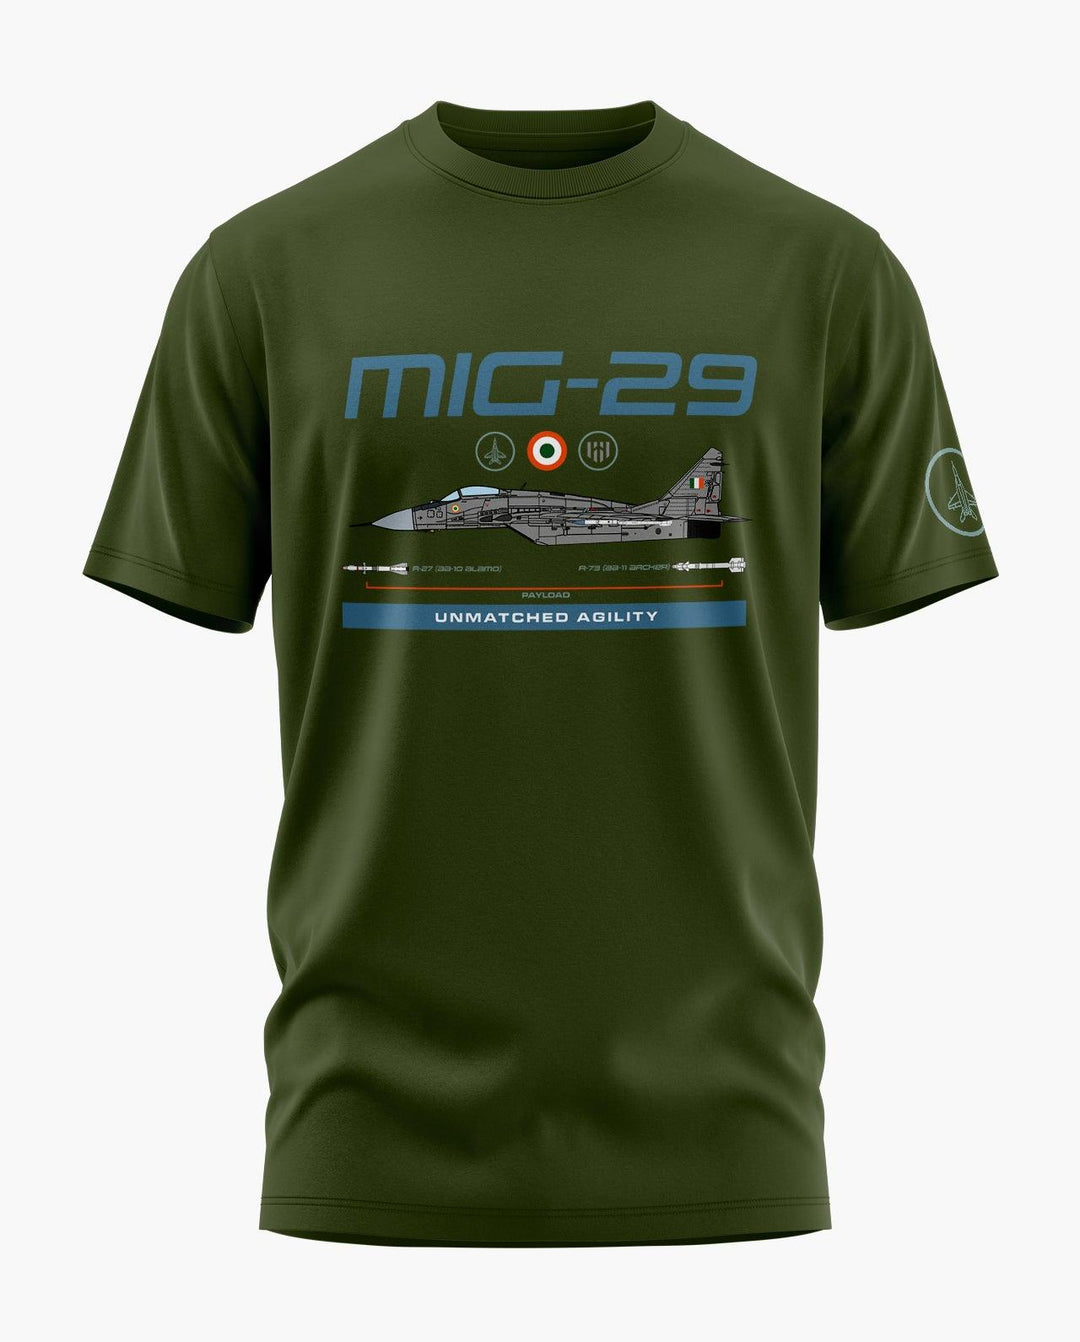 MIG-29 SUPERSONIC T-Shirt - Aero Armour